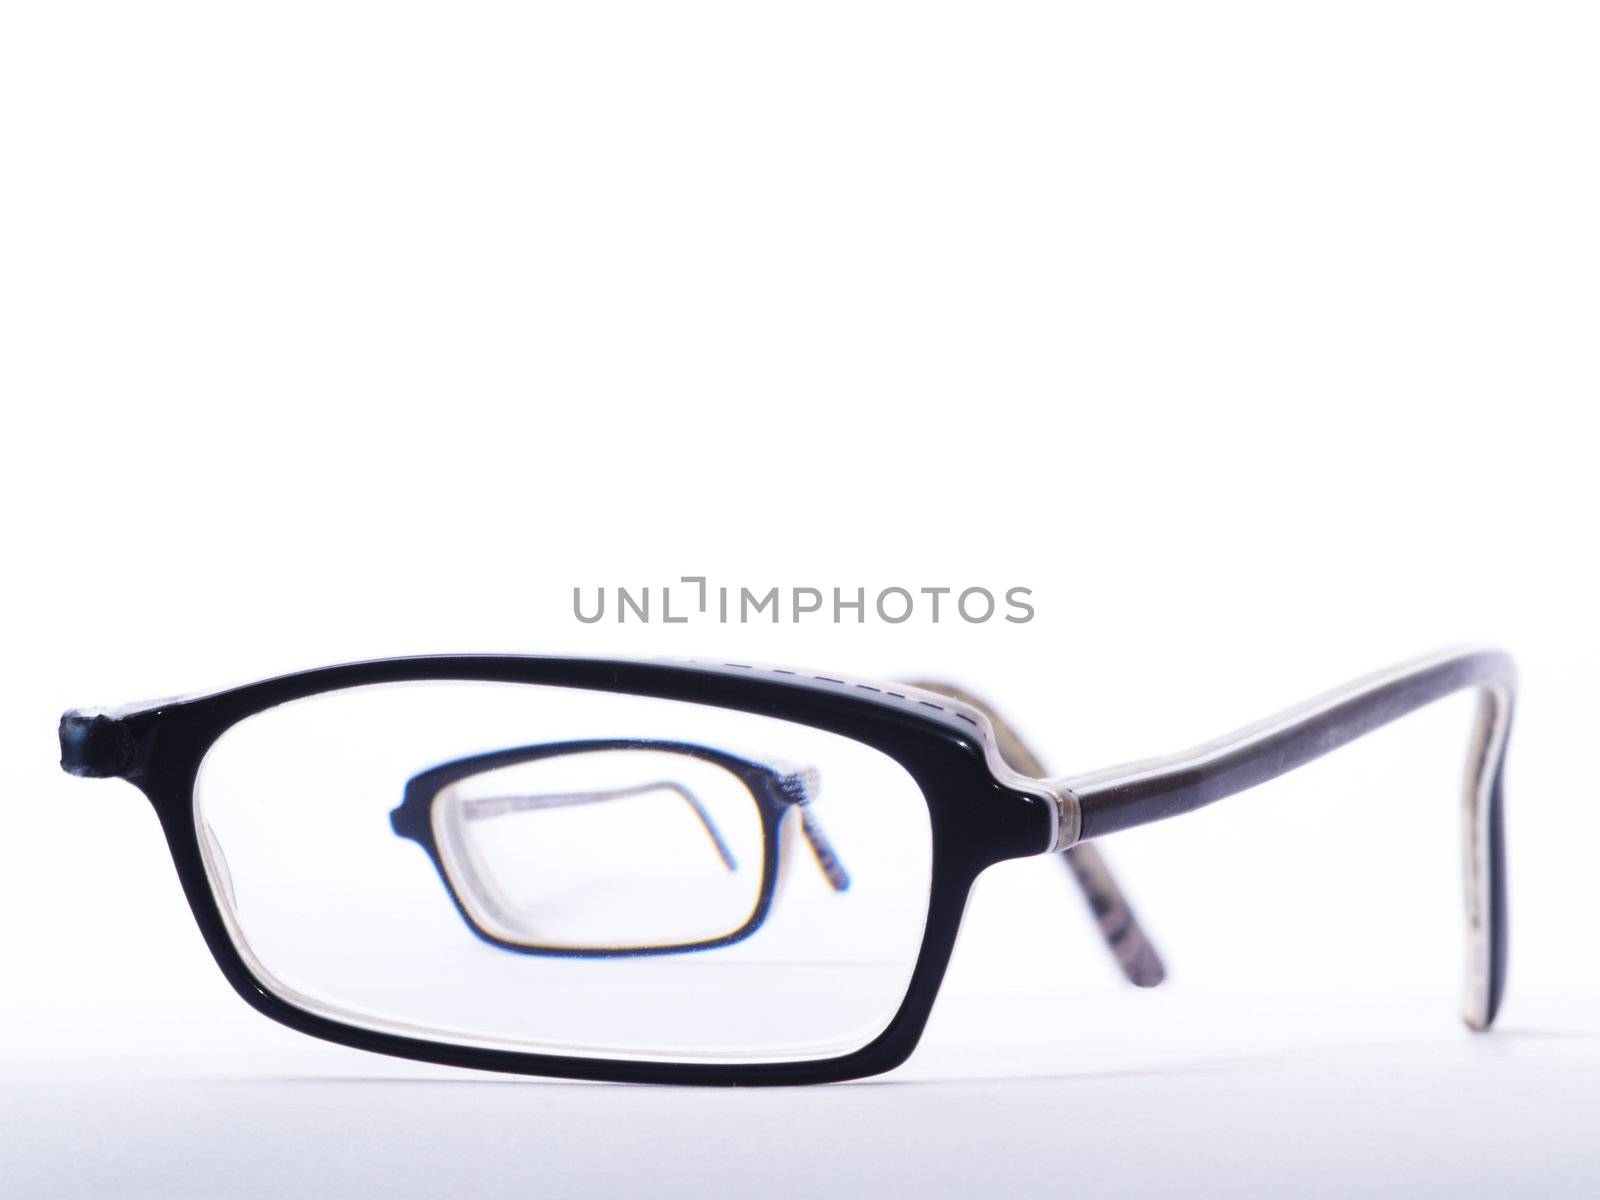 broken eyeglasses by derausdo